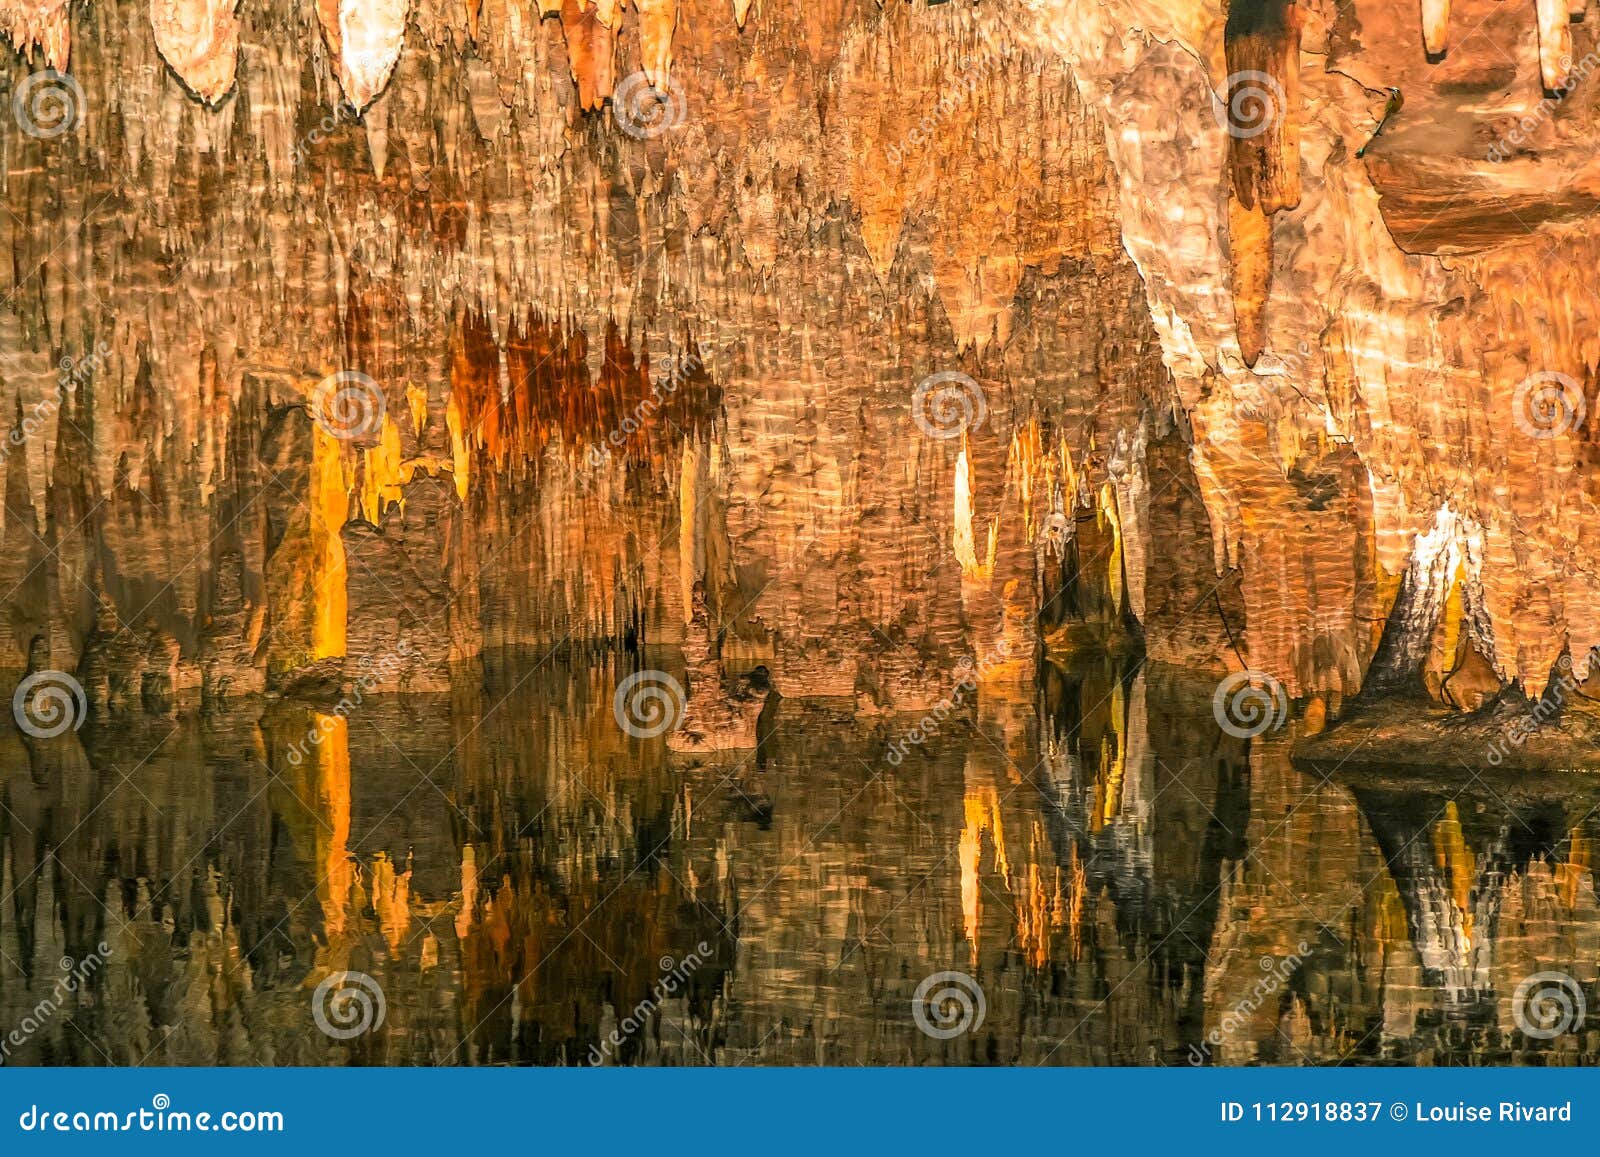 aktun chen caves on riviera maya